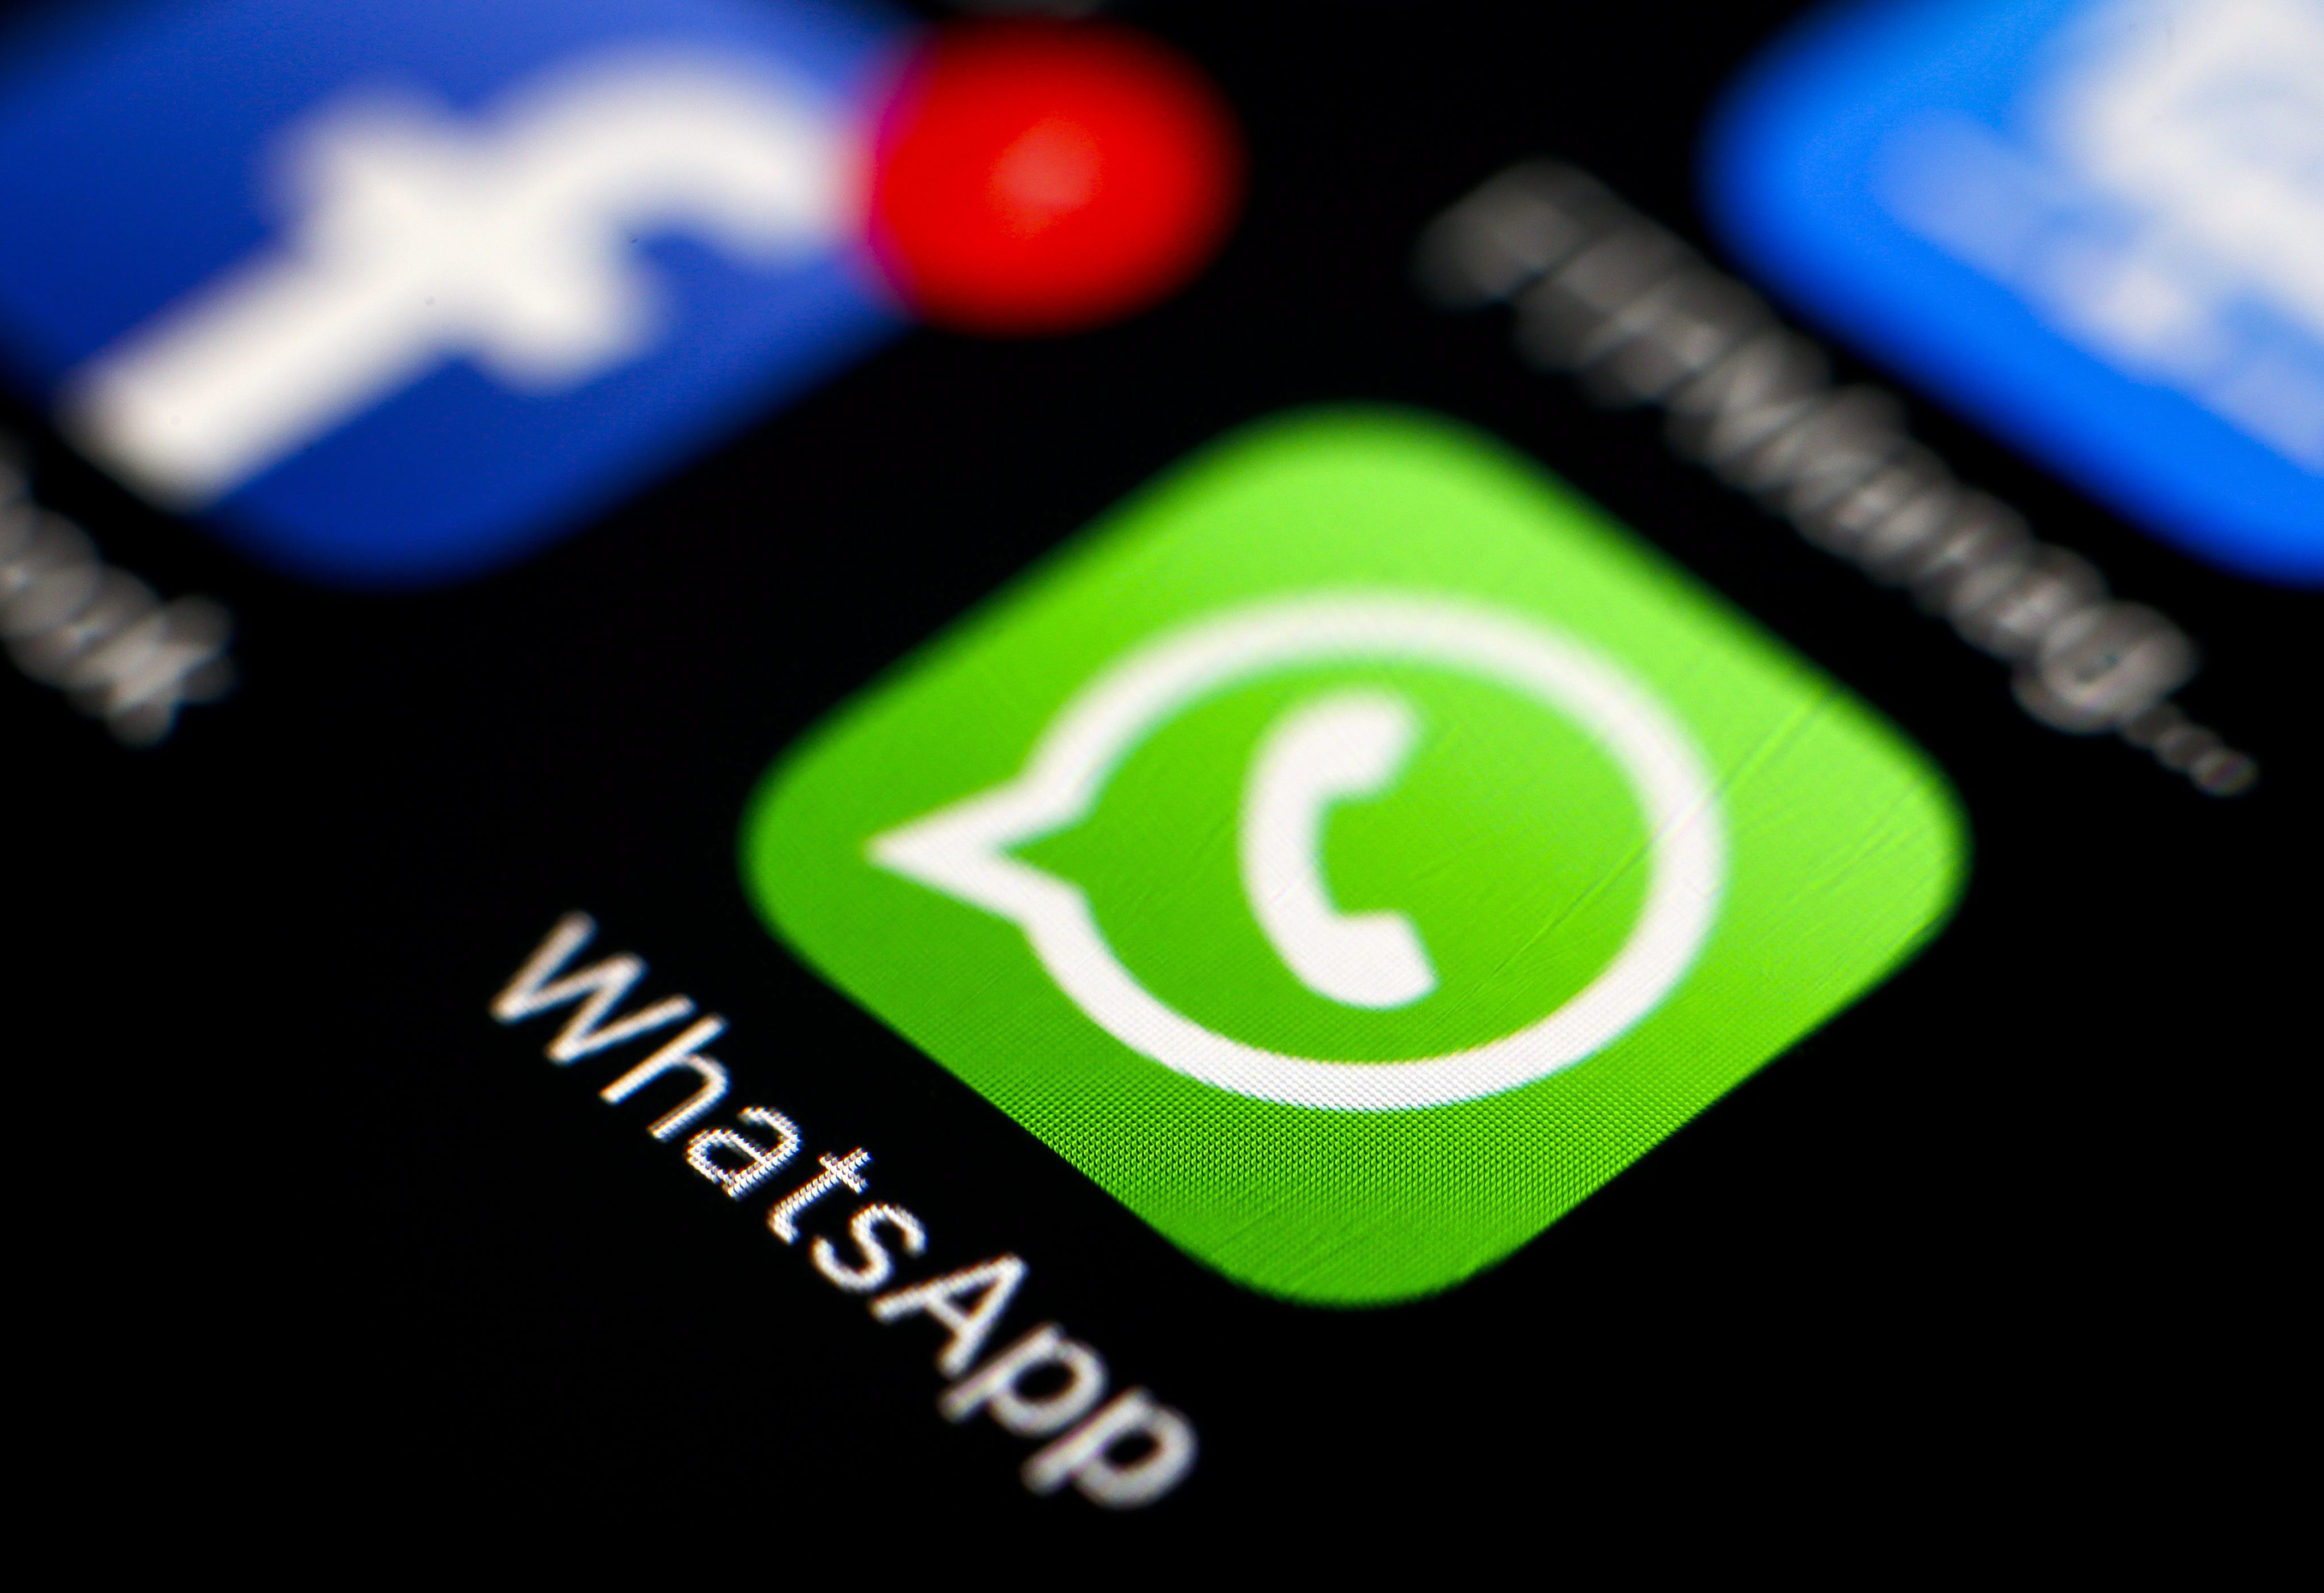 App Store 10 يوليو 2020 ، يجعل WhatsApp الاتصال بخدمة العملاء أسهل بفضل الإضافة